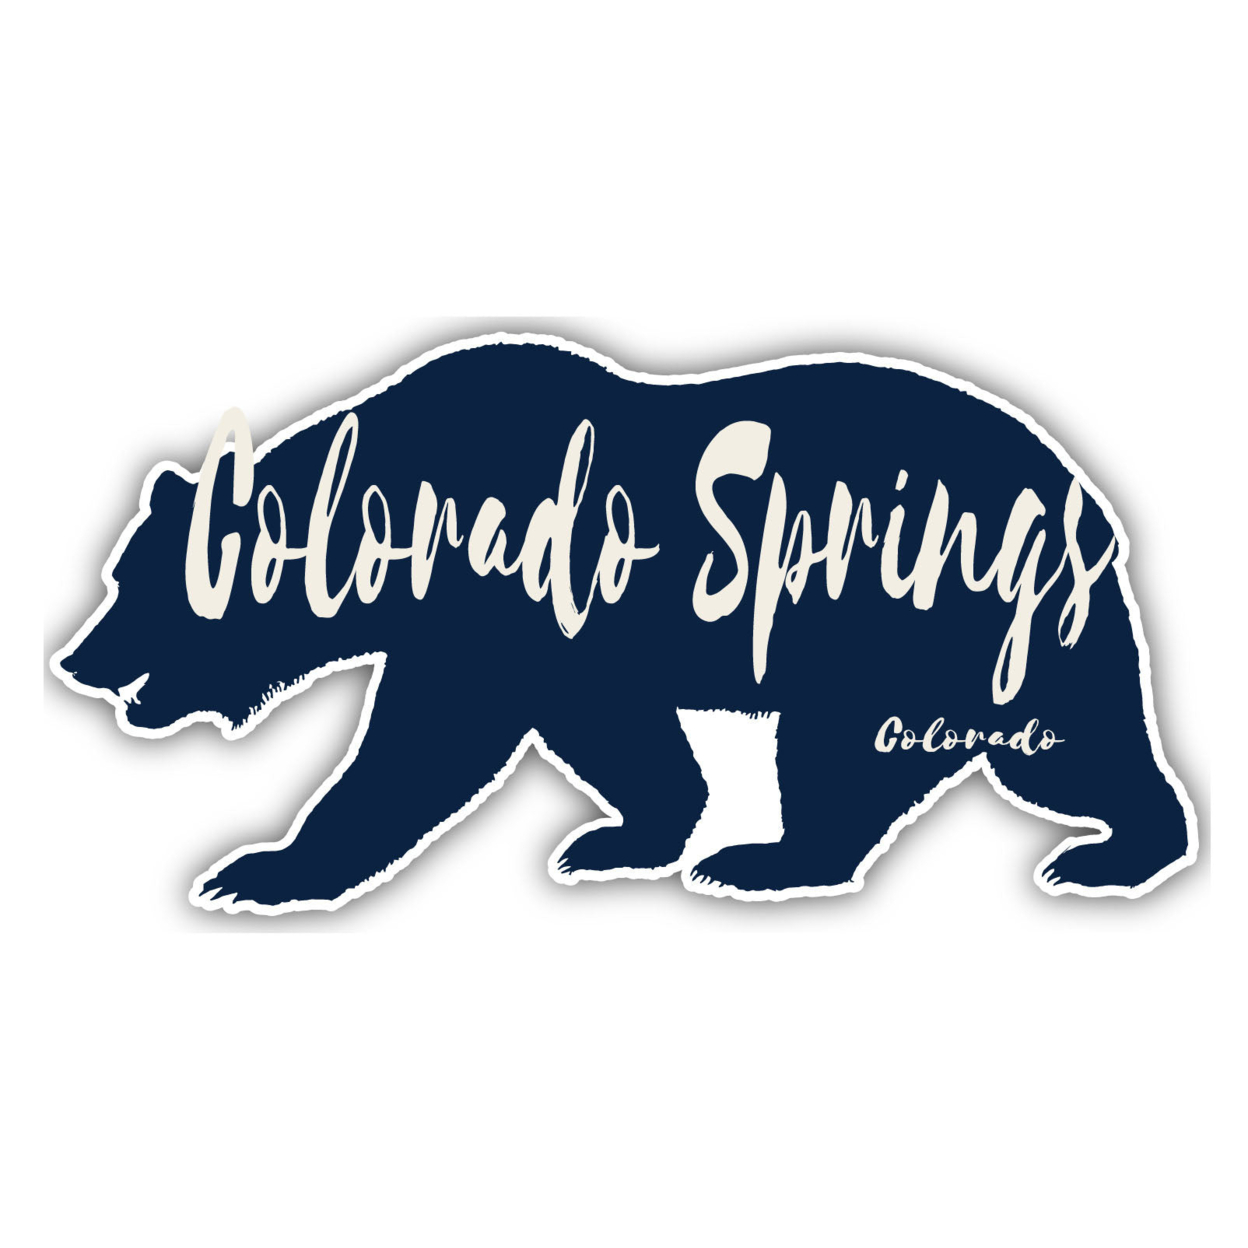 Colorado Springs Colorado Souvenir Decorative Stickers (Choose Theme And Size) - 4-Pack, 6-Inch, Bear